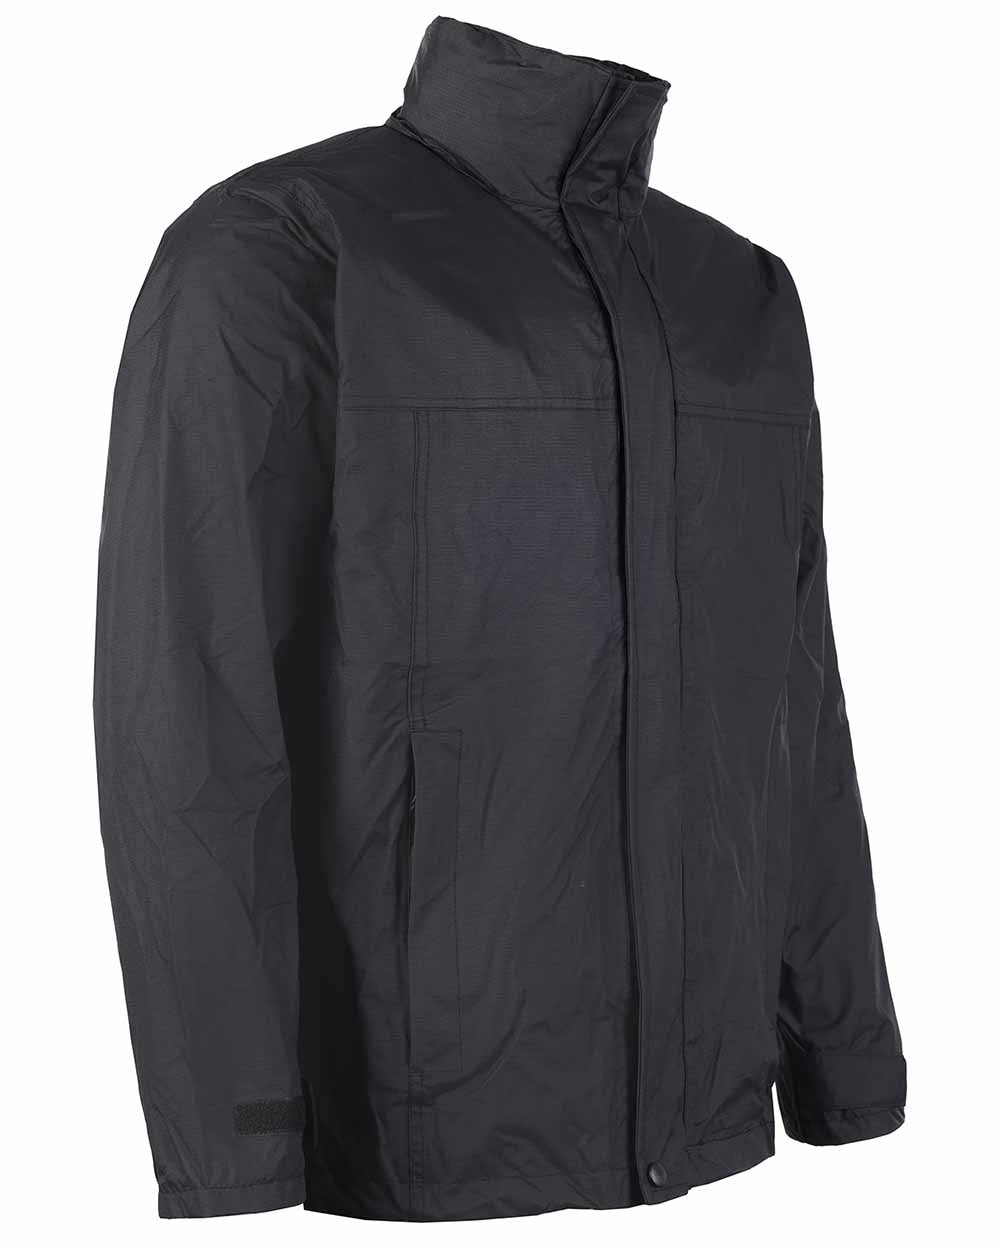 Black Coloured Fort Rutland Waterproof Jacket On A White Background